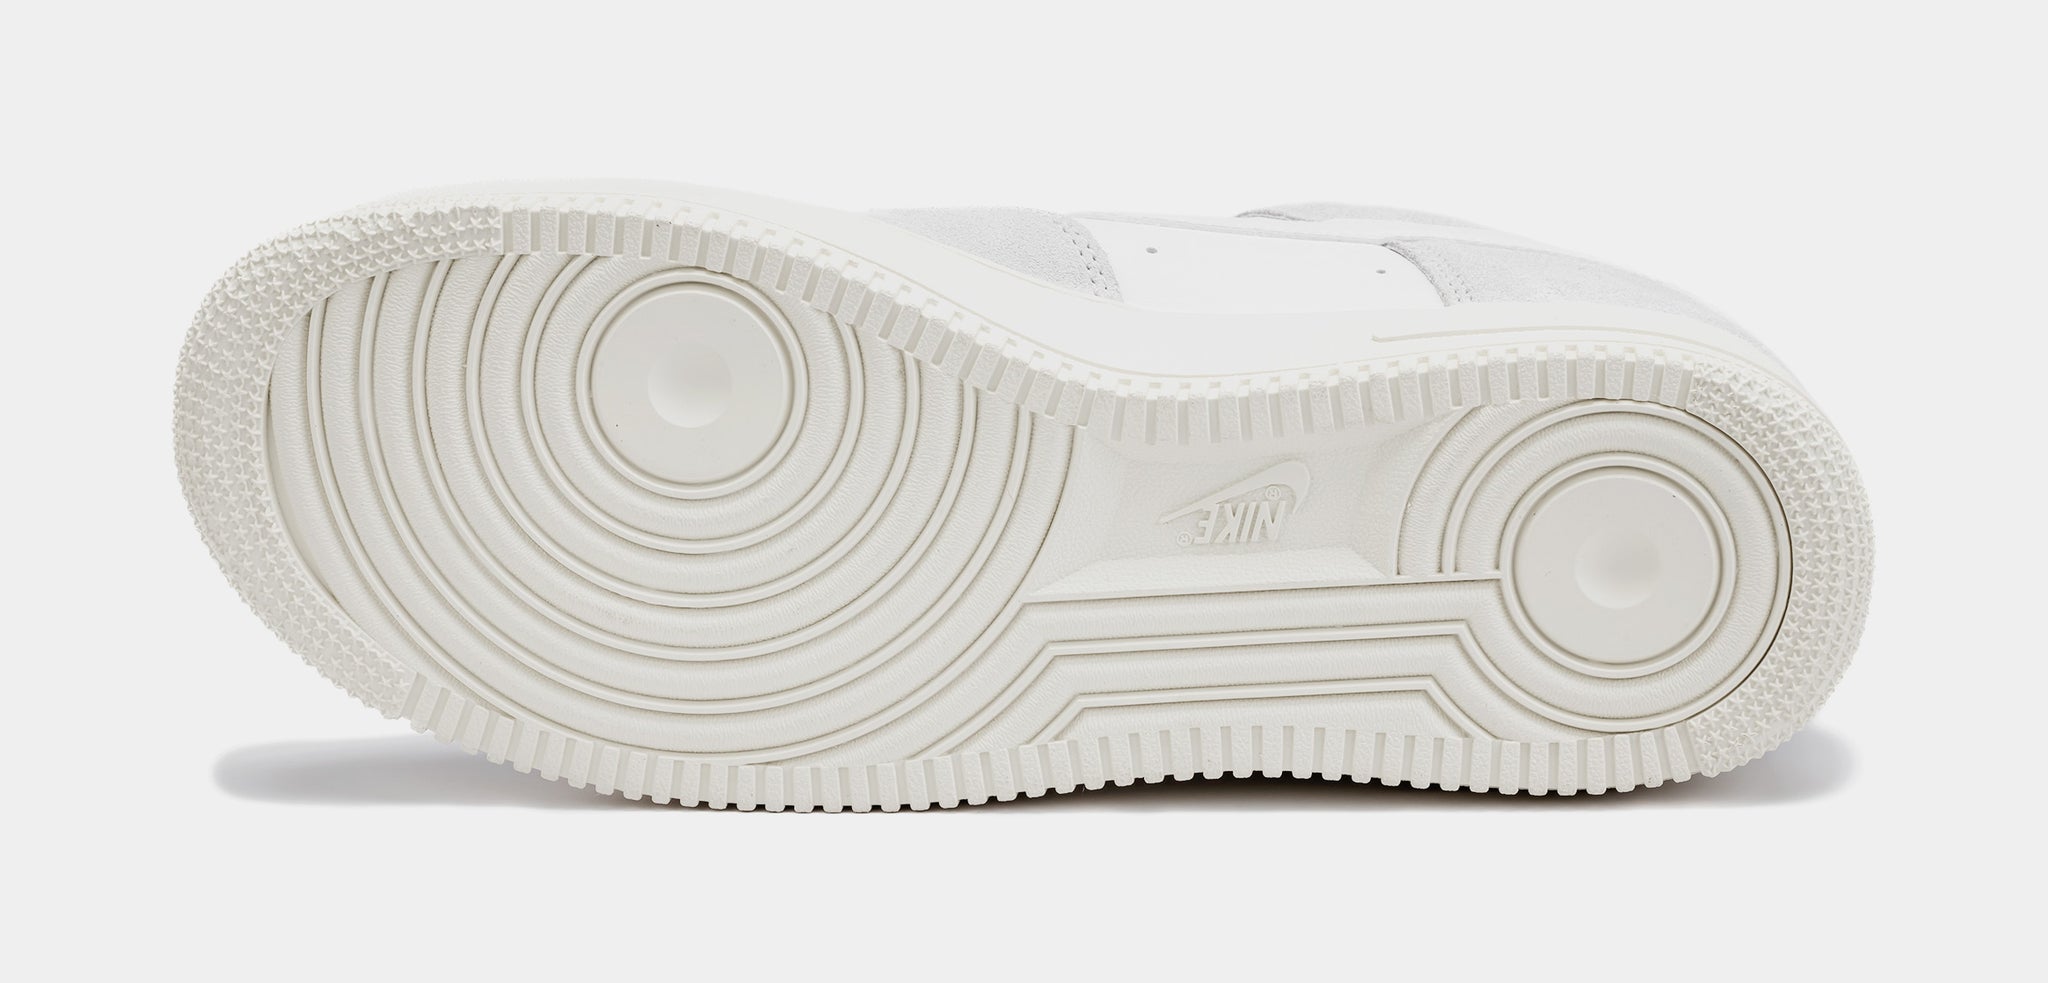 Nike Air Force 1 07 Lv8 Sneakers White / Sail / Platinum Tint for Men